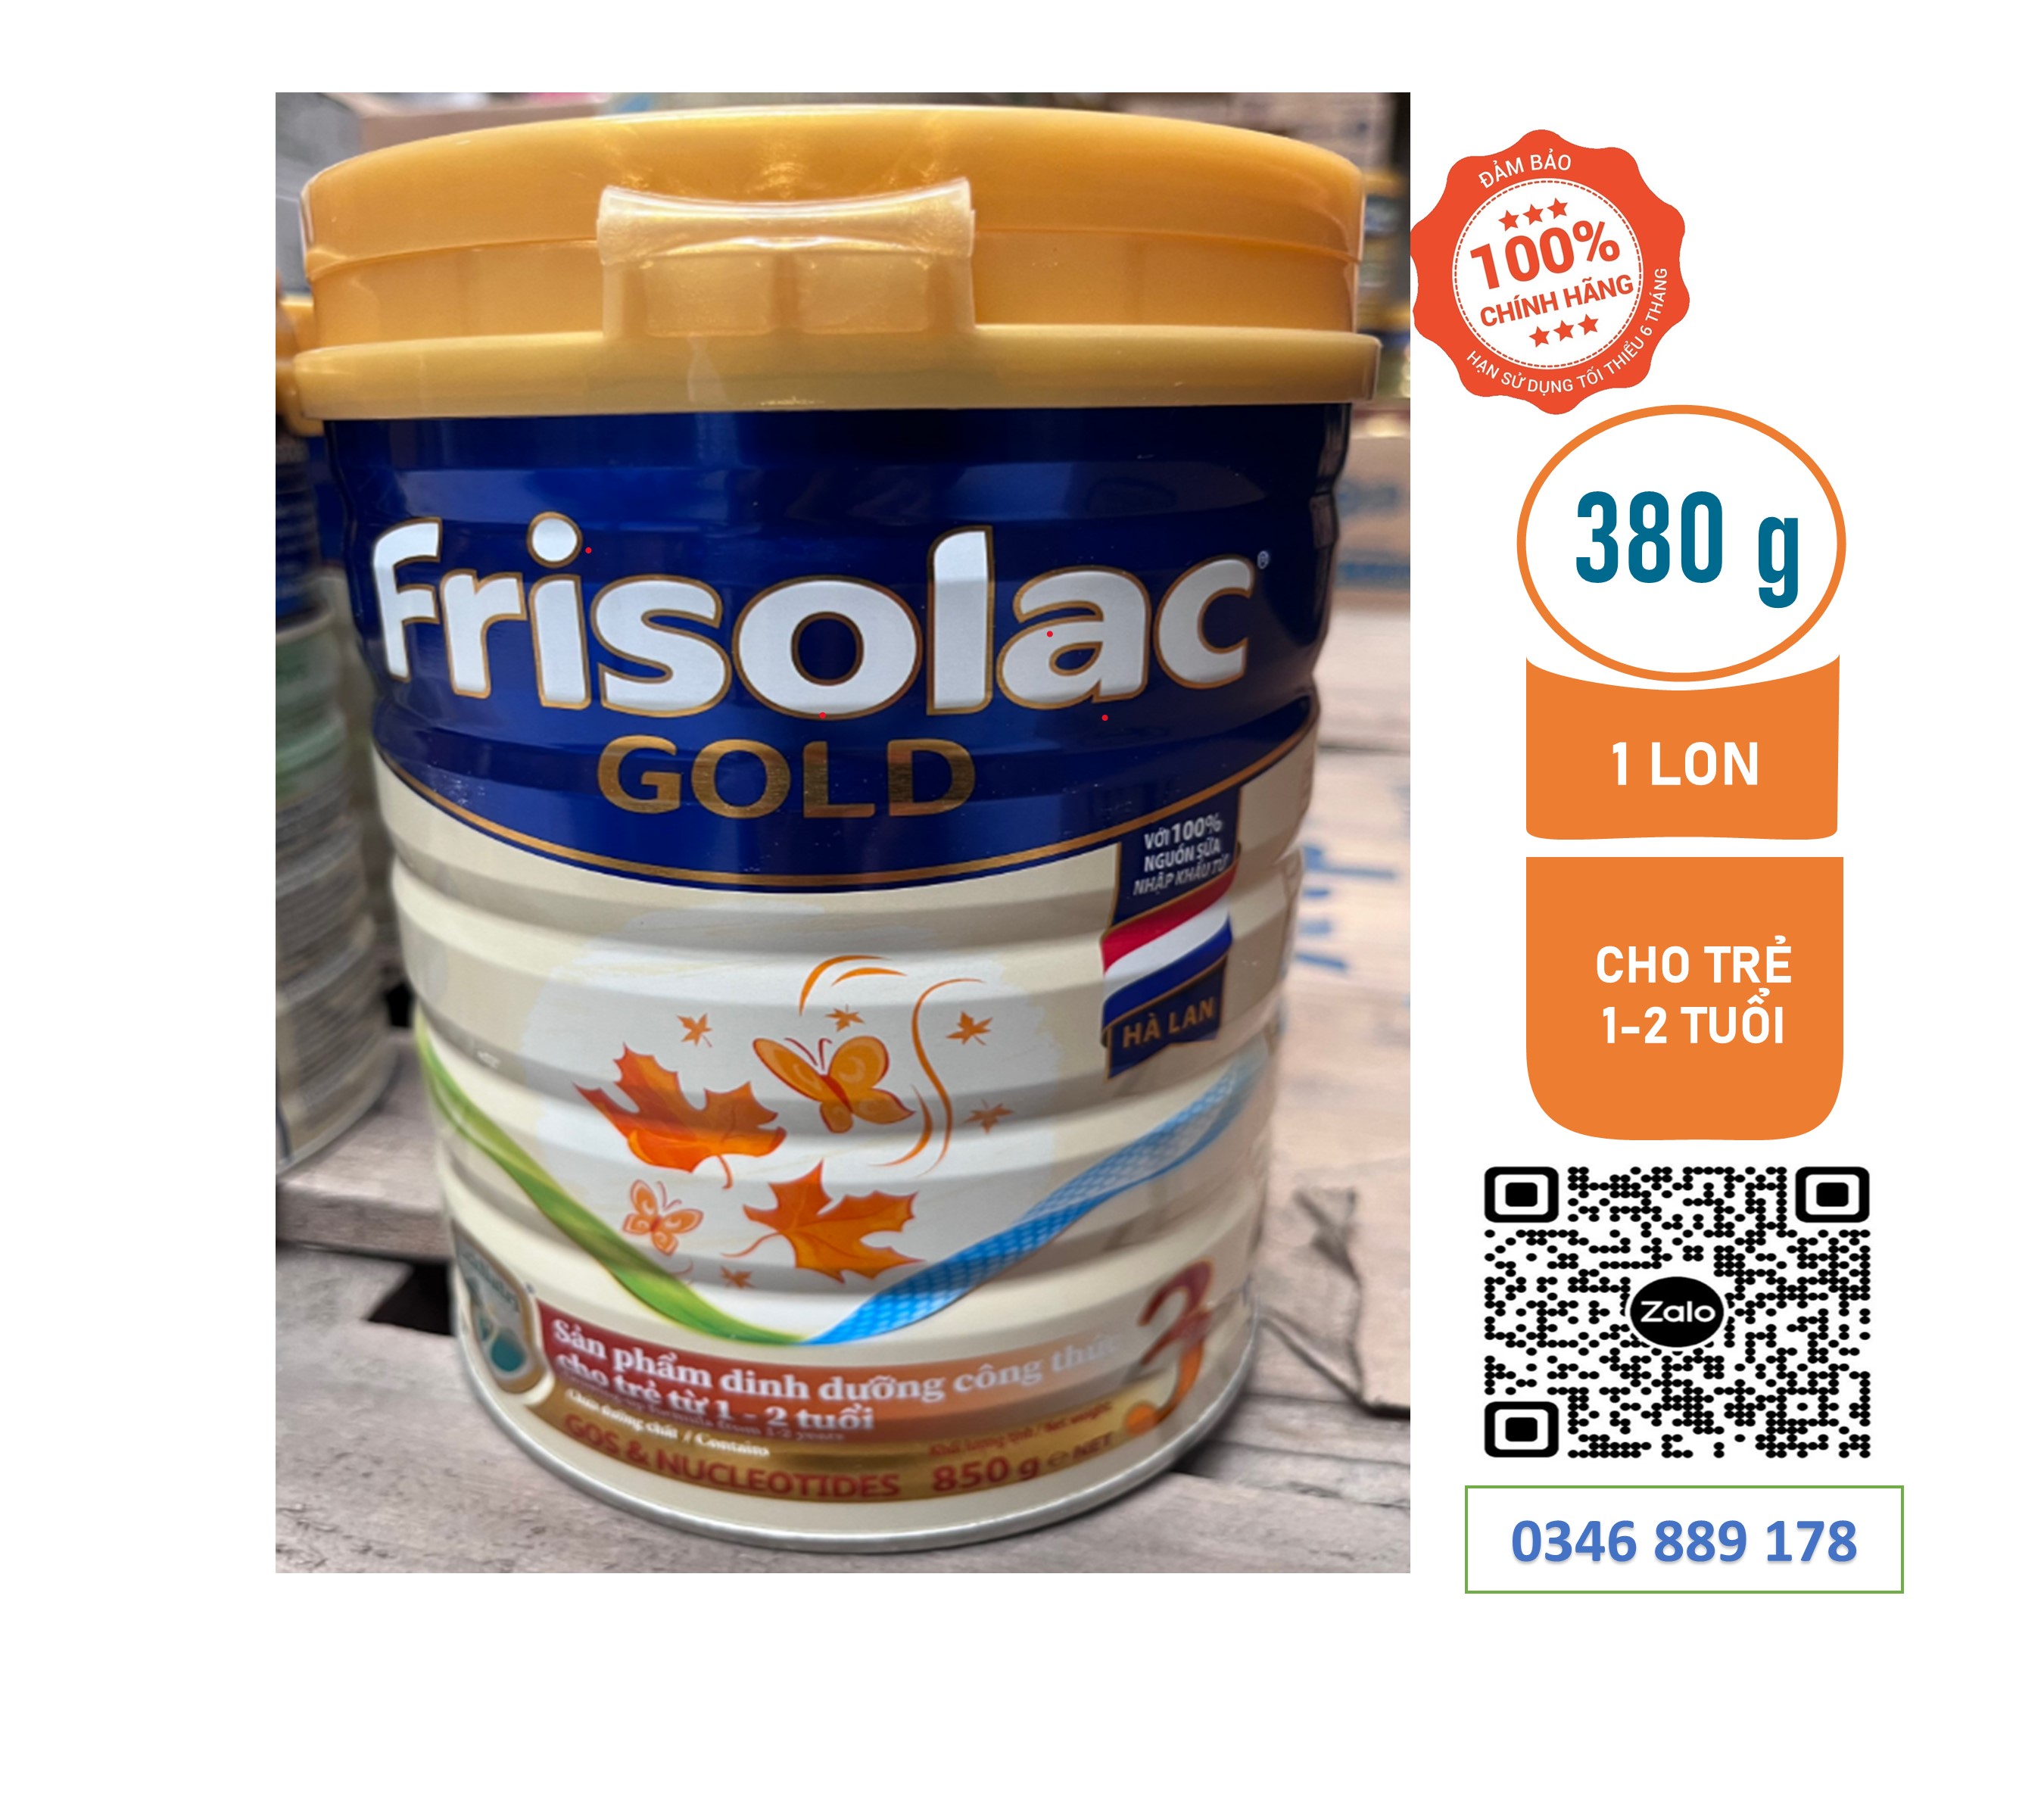 Sữa Bột Frisolac Gold 3 380g